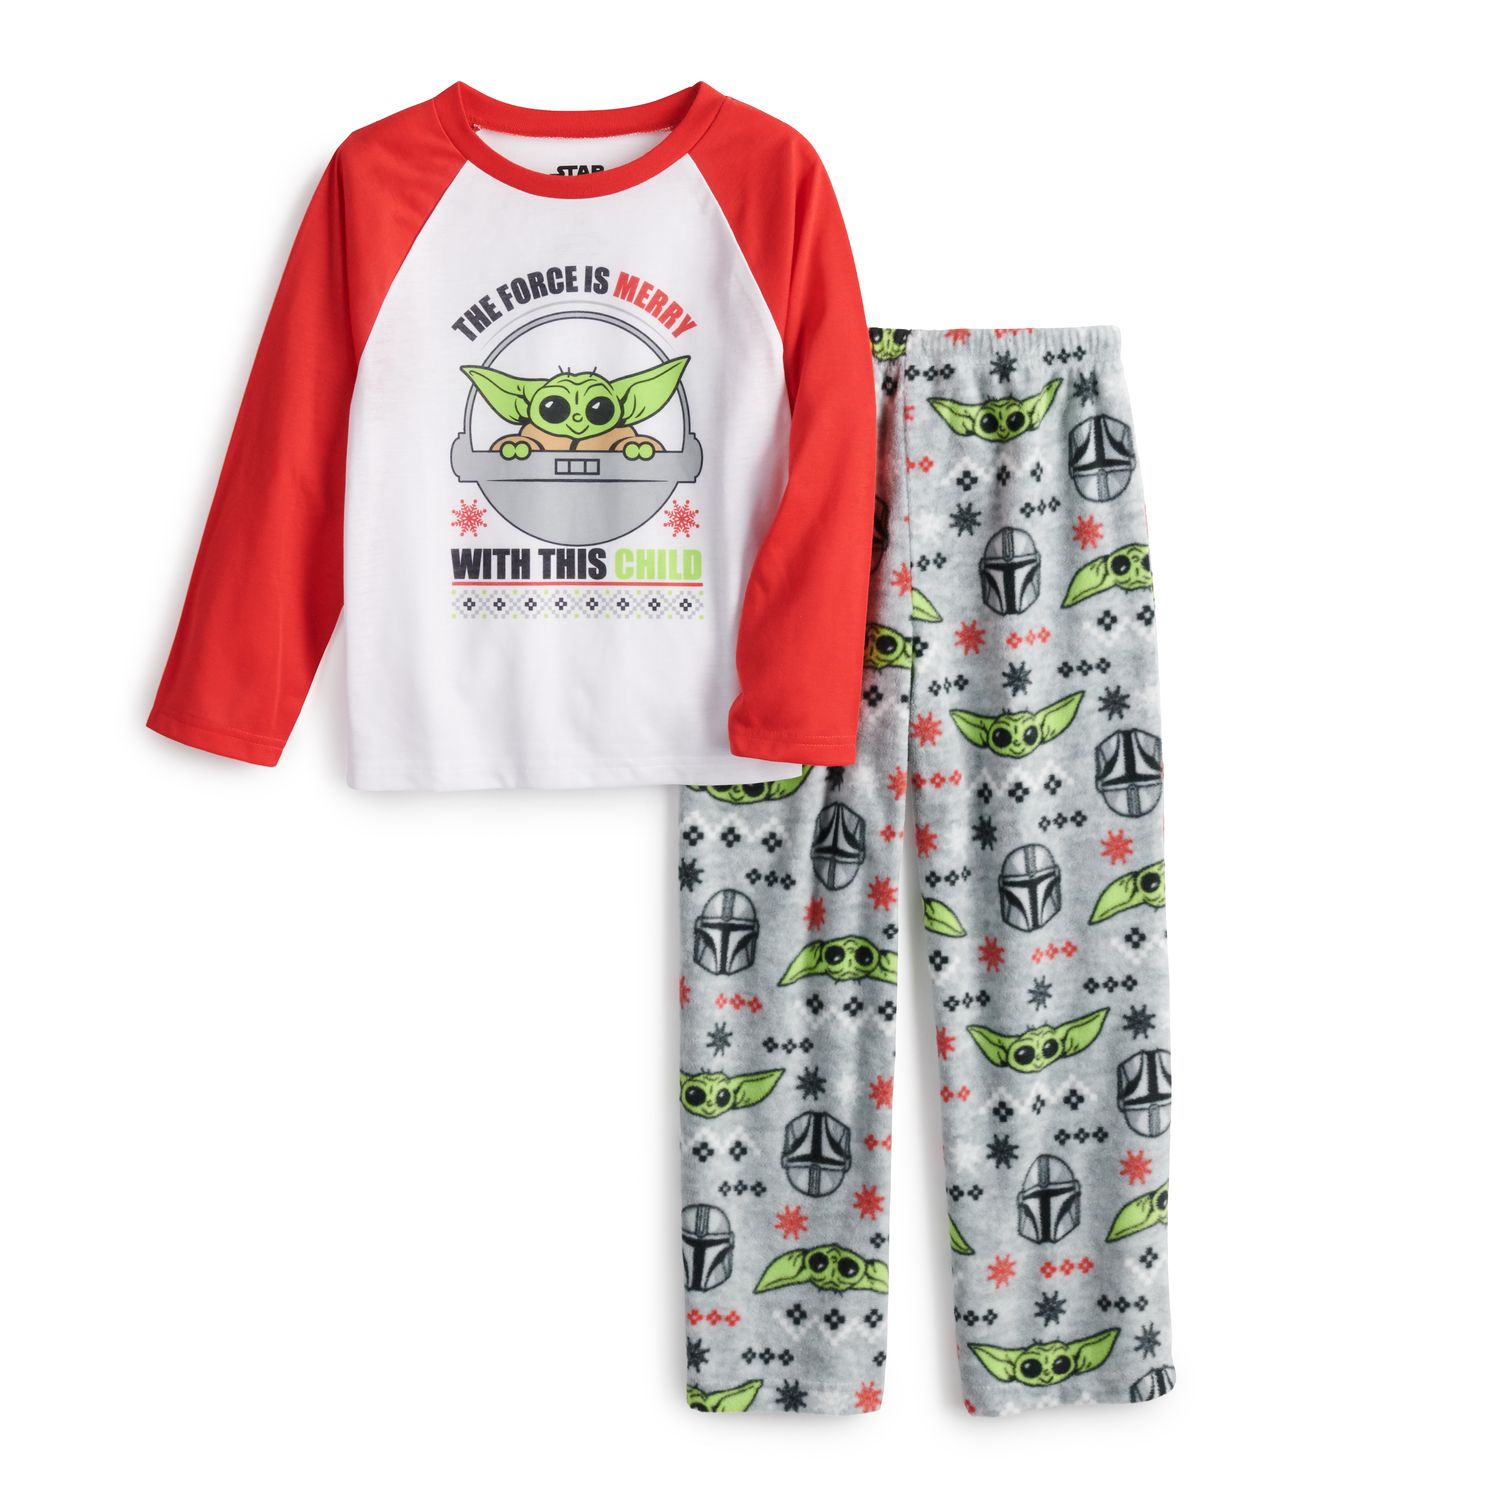 Boys Kids Official Star Wars Luke Skywalker Darth Vader Long Sleeve Pyjamas PJs 